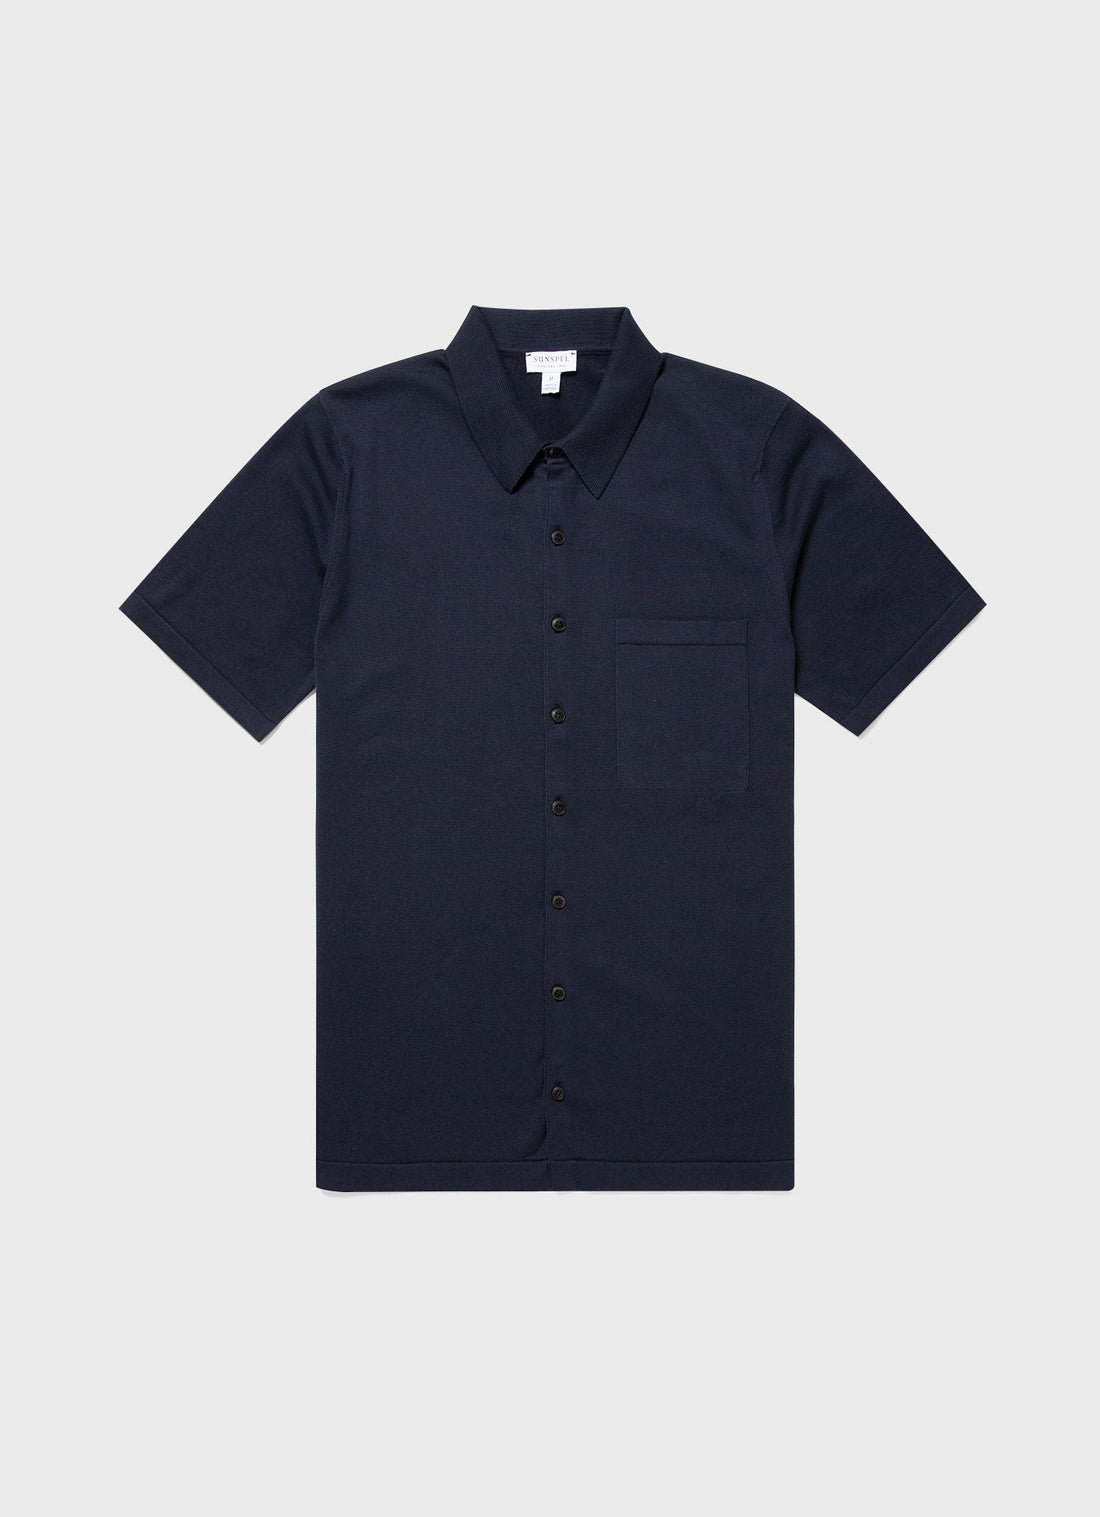 Men's Sea Island Cotton Knit Shirt in Light Navy